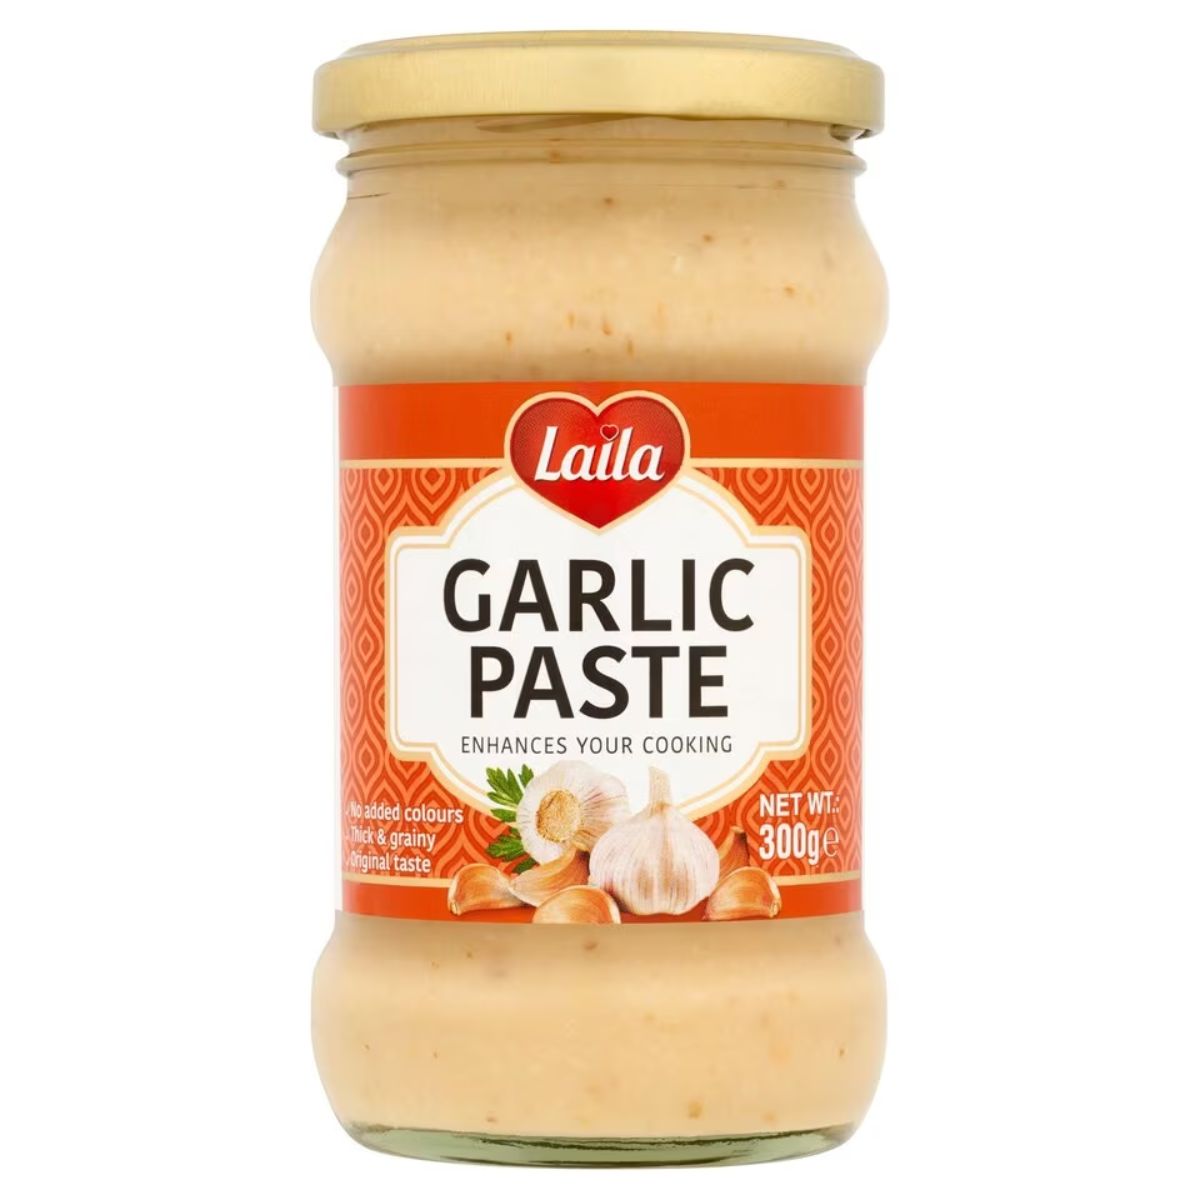 A Laila - Garlic Paste - 300g on a white background.